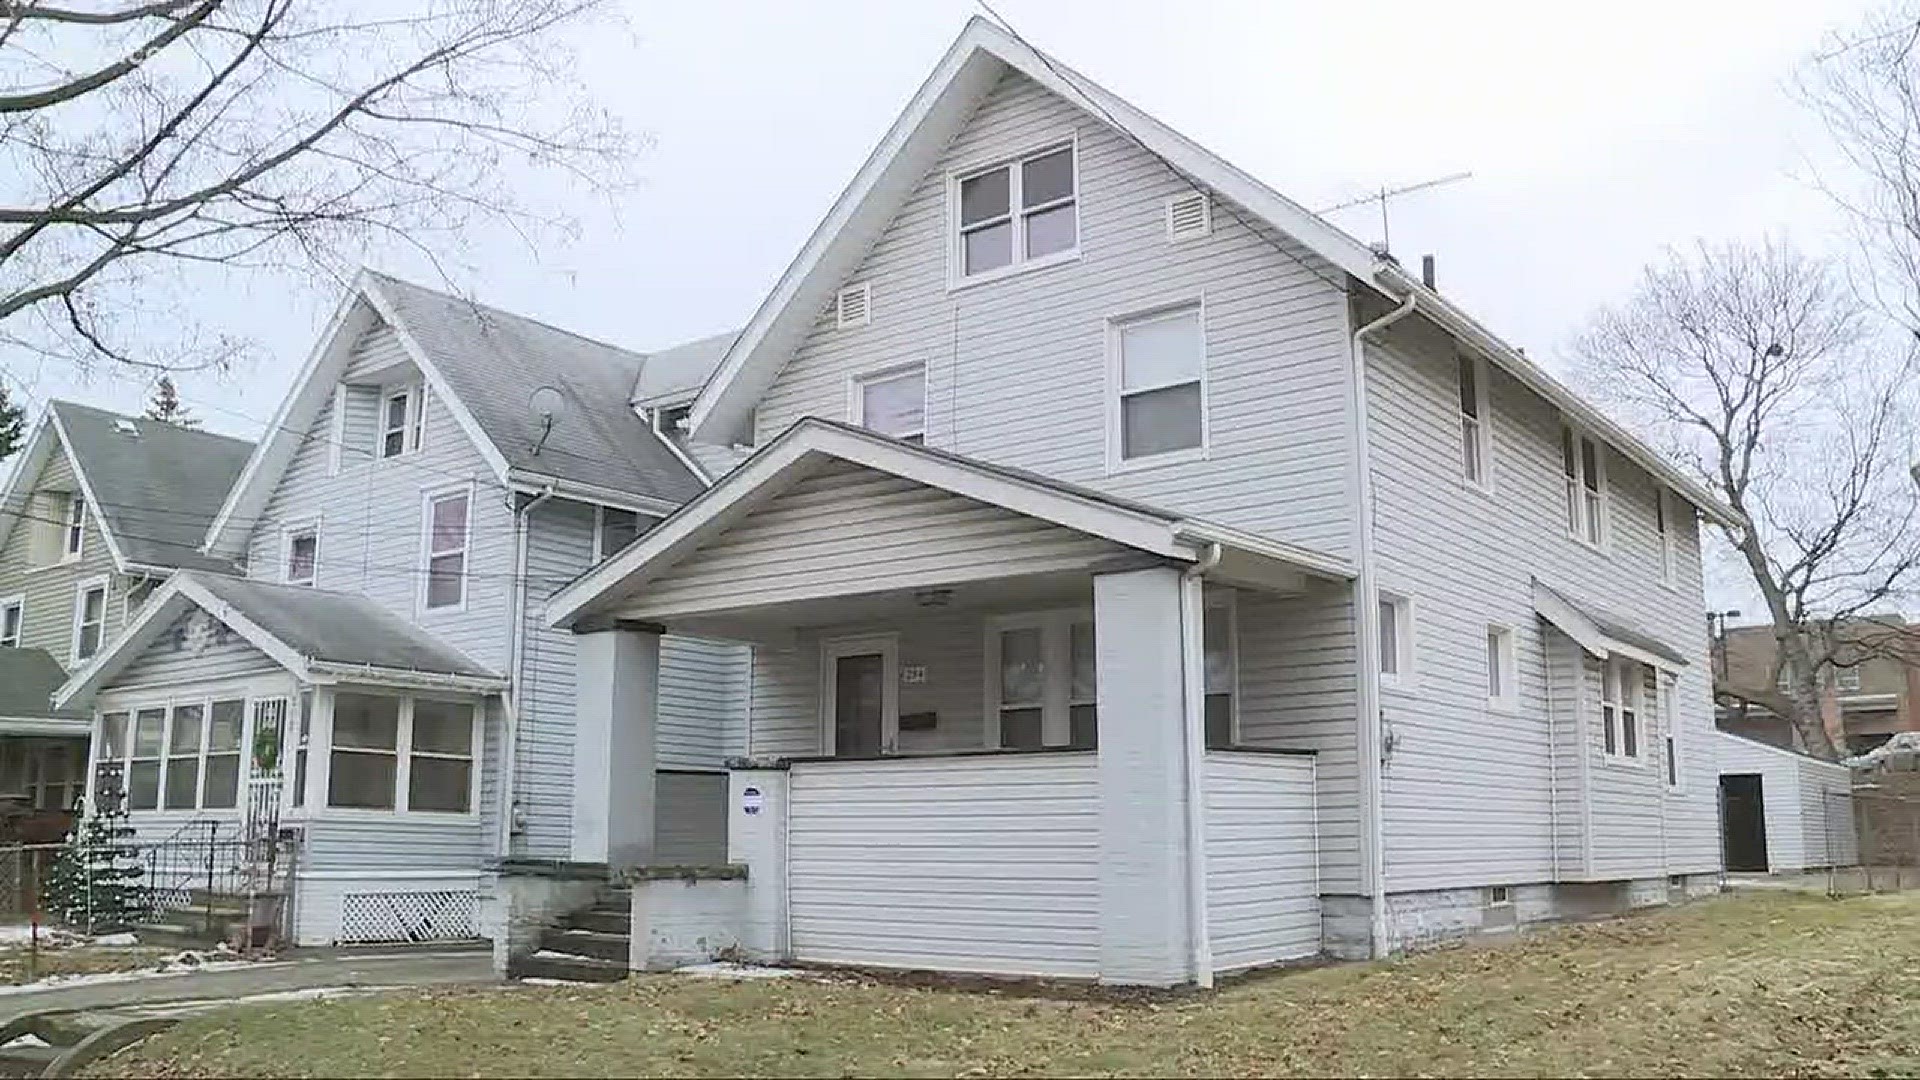 Initiatives in Akron working to rebuild housing market